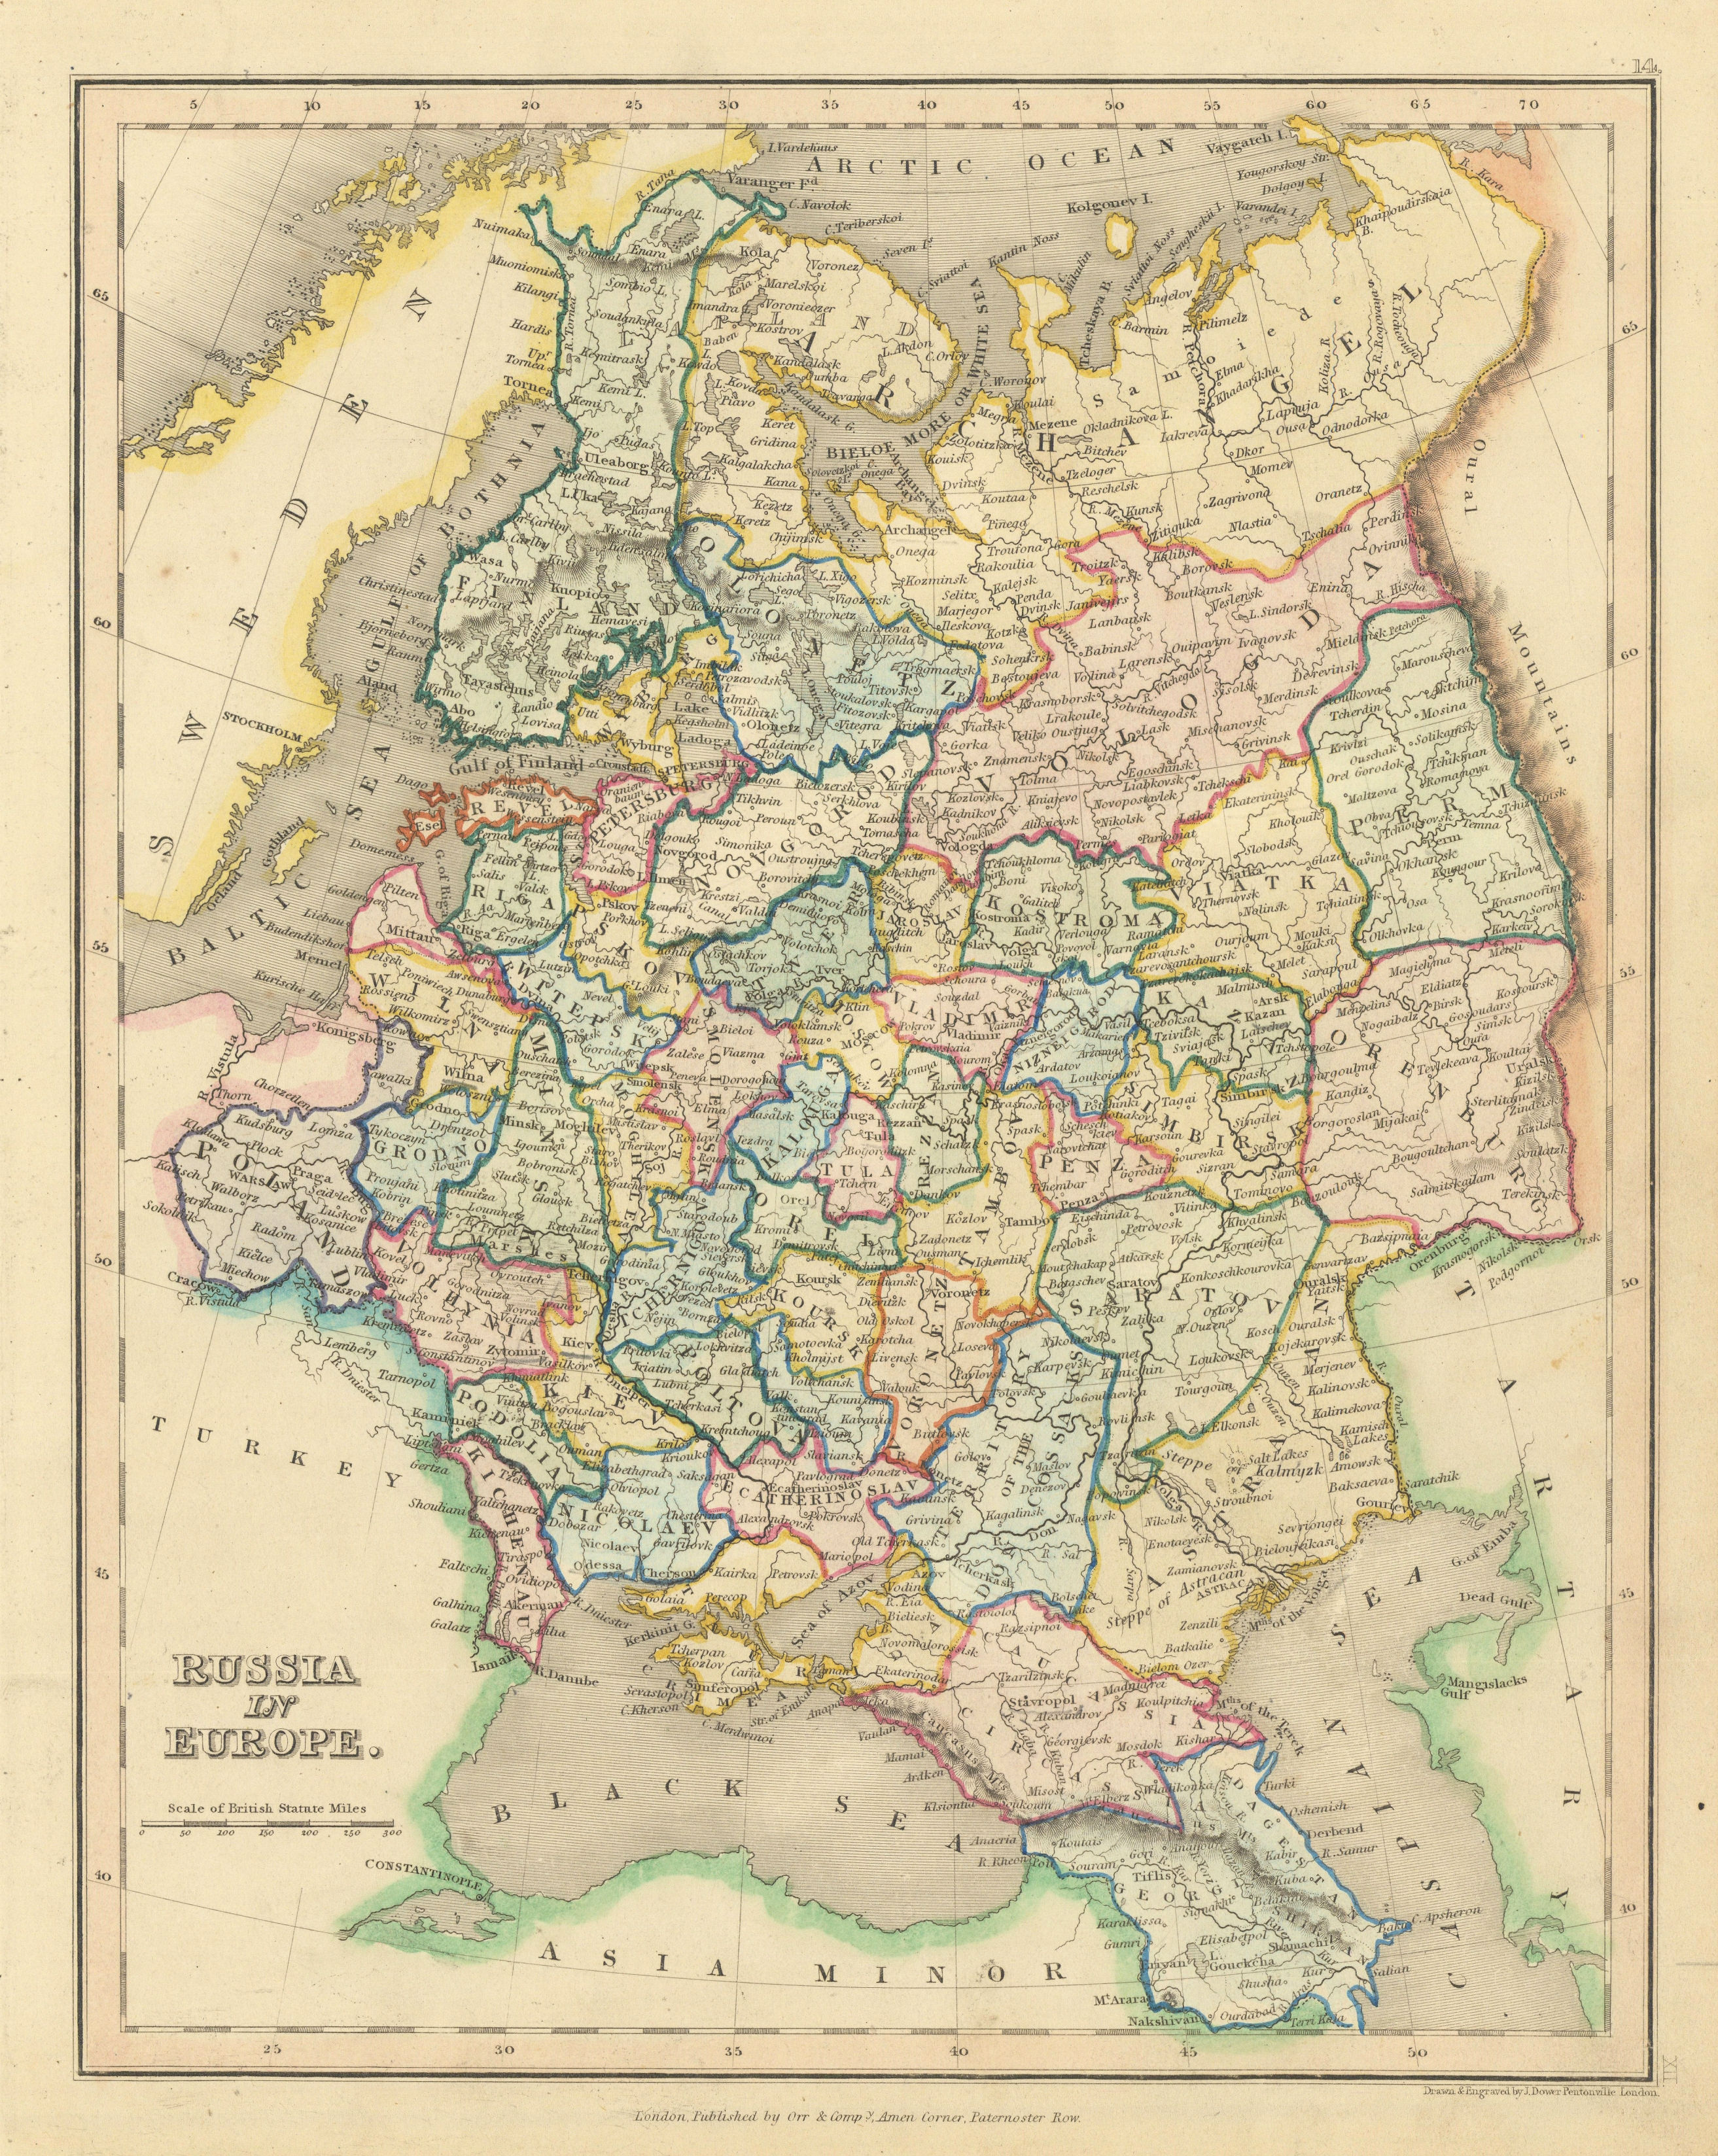 Associate Product Russia in Europe by John Dower. Finland Poland Georgia Ukraine Belarus 1845 map